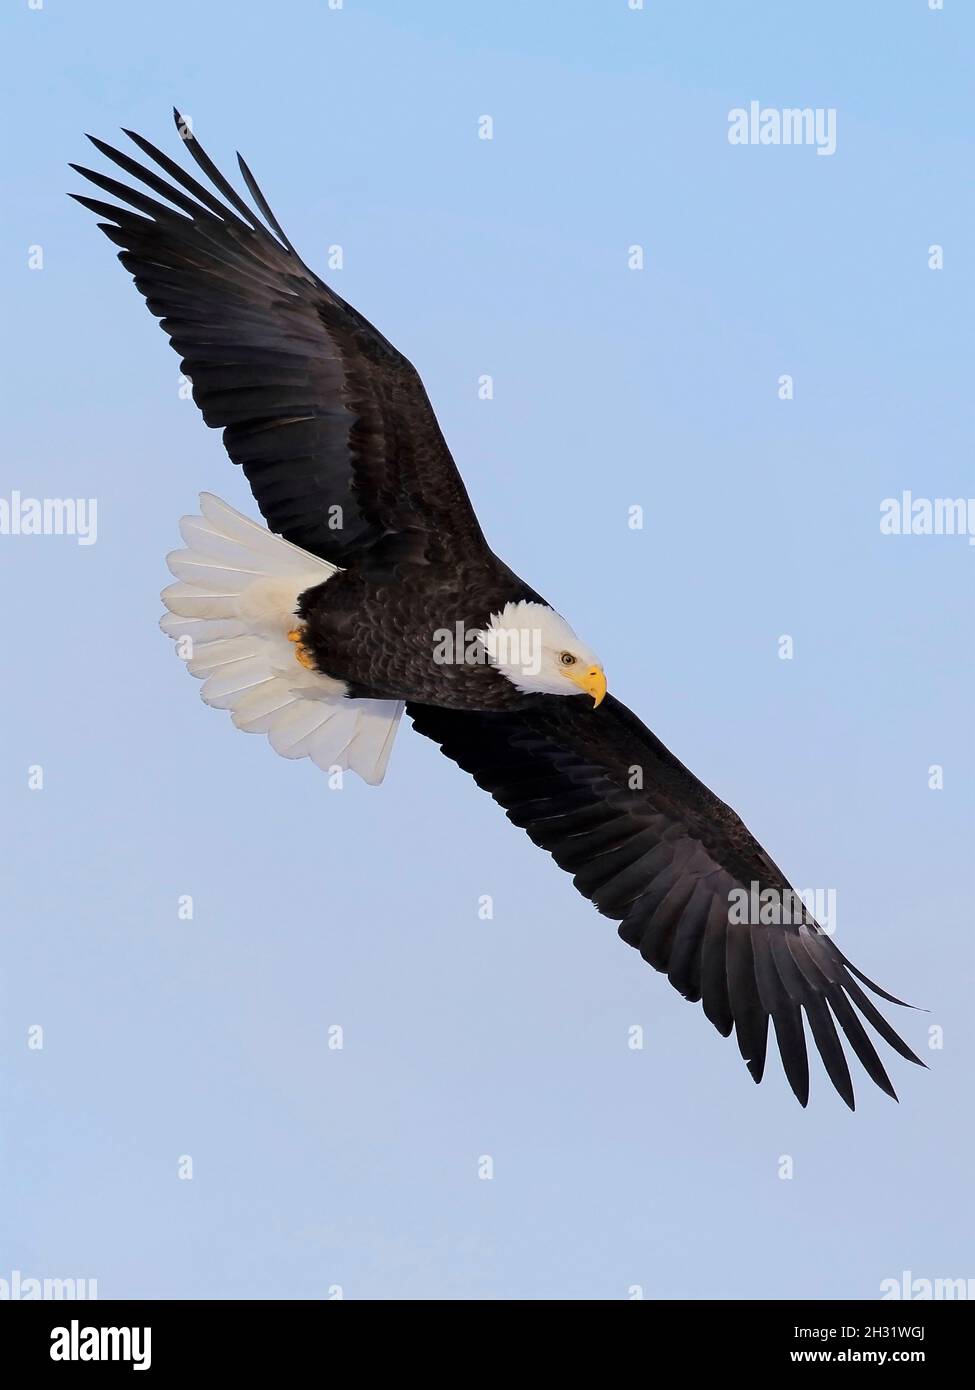 Mature Bald Eagle in flight on light blue sky. Stock Photo